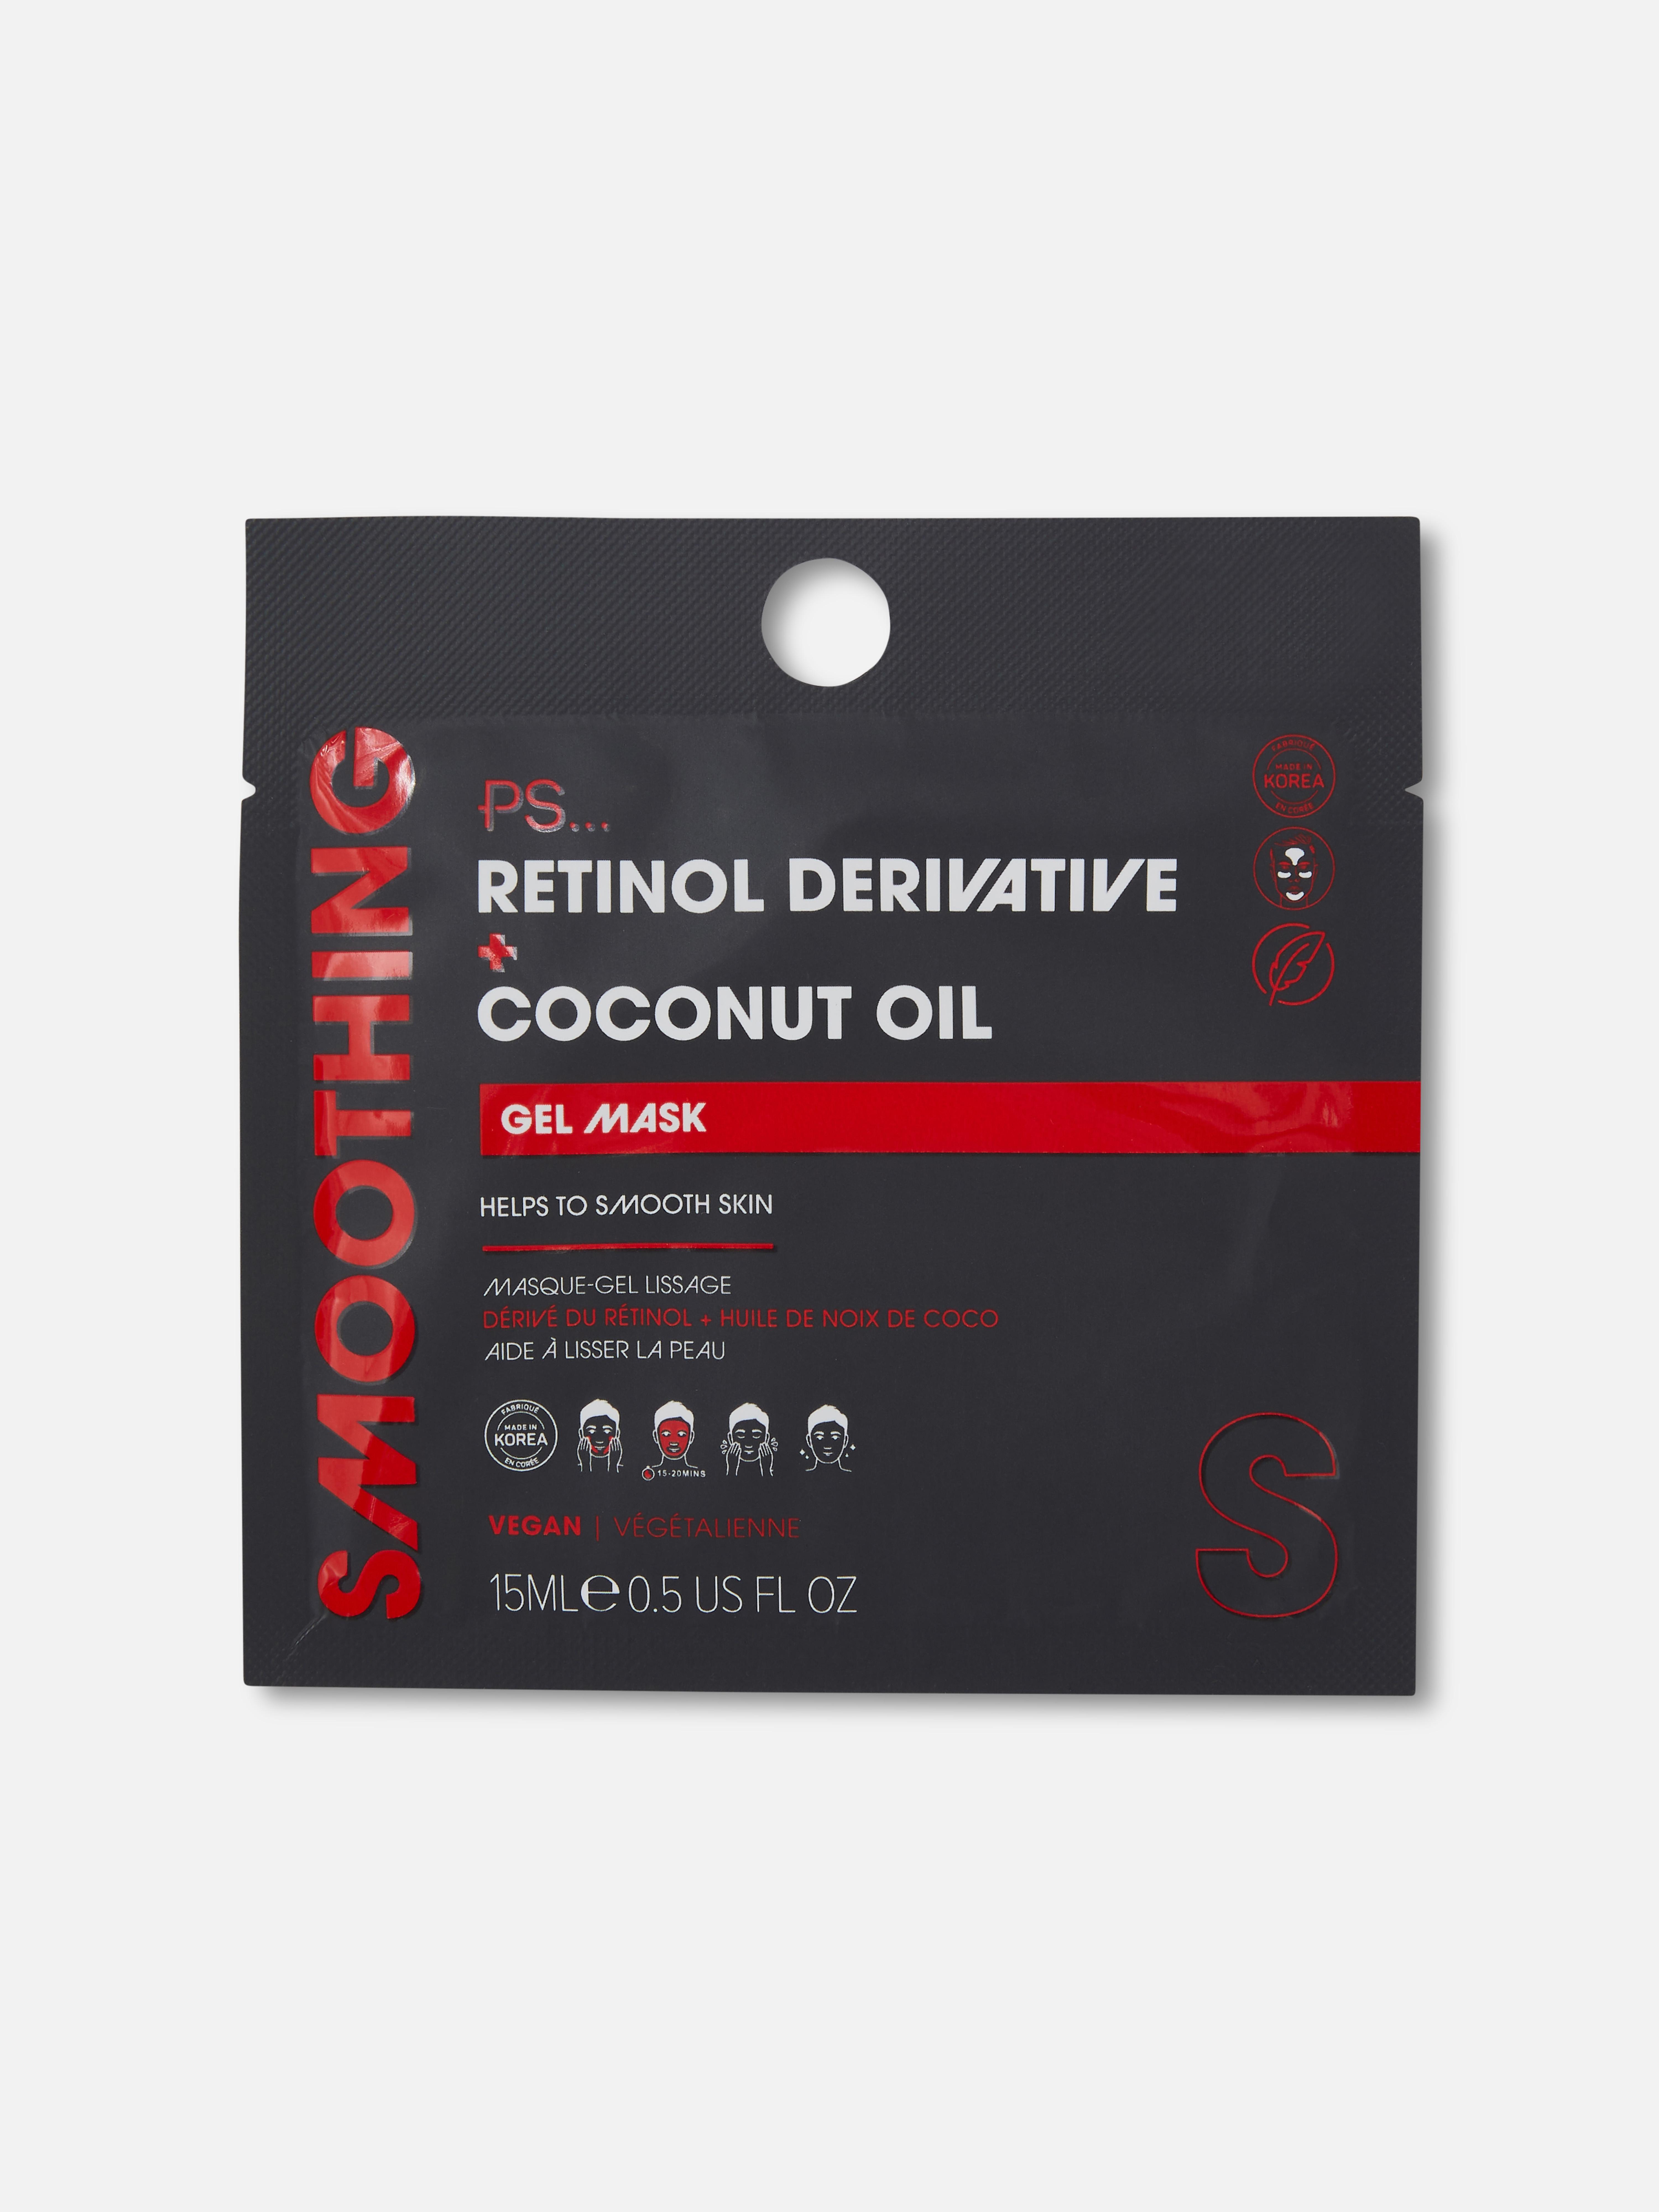 PS… Retinol Derivative and Coconut Oil Gel Mask